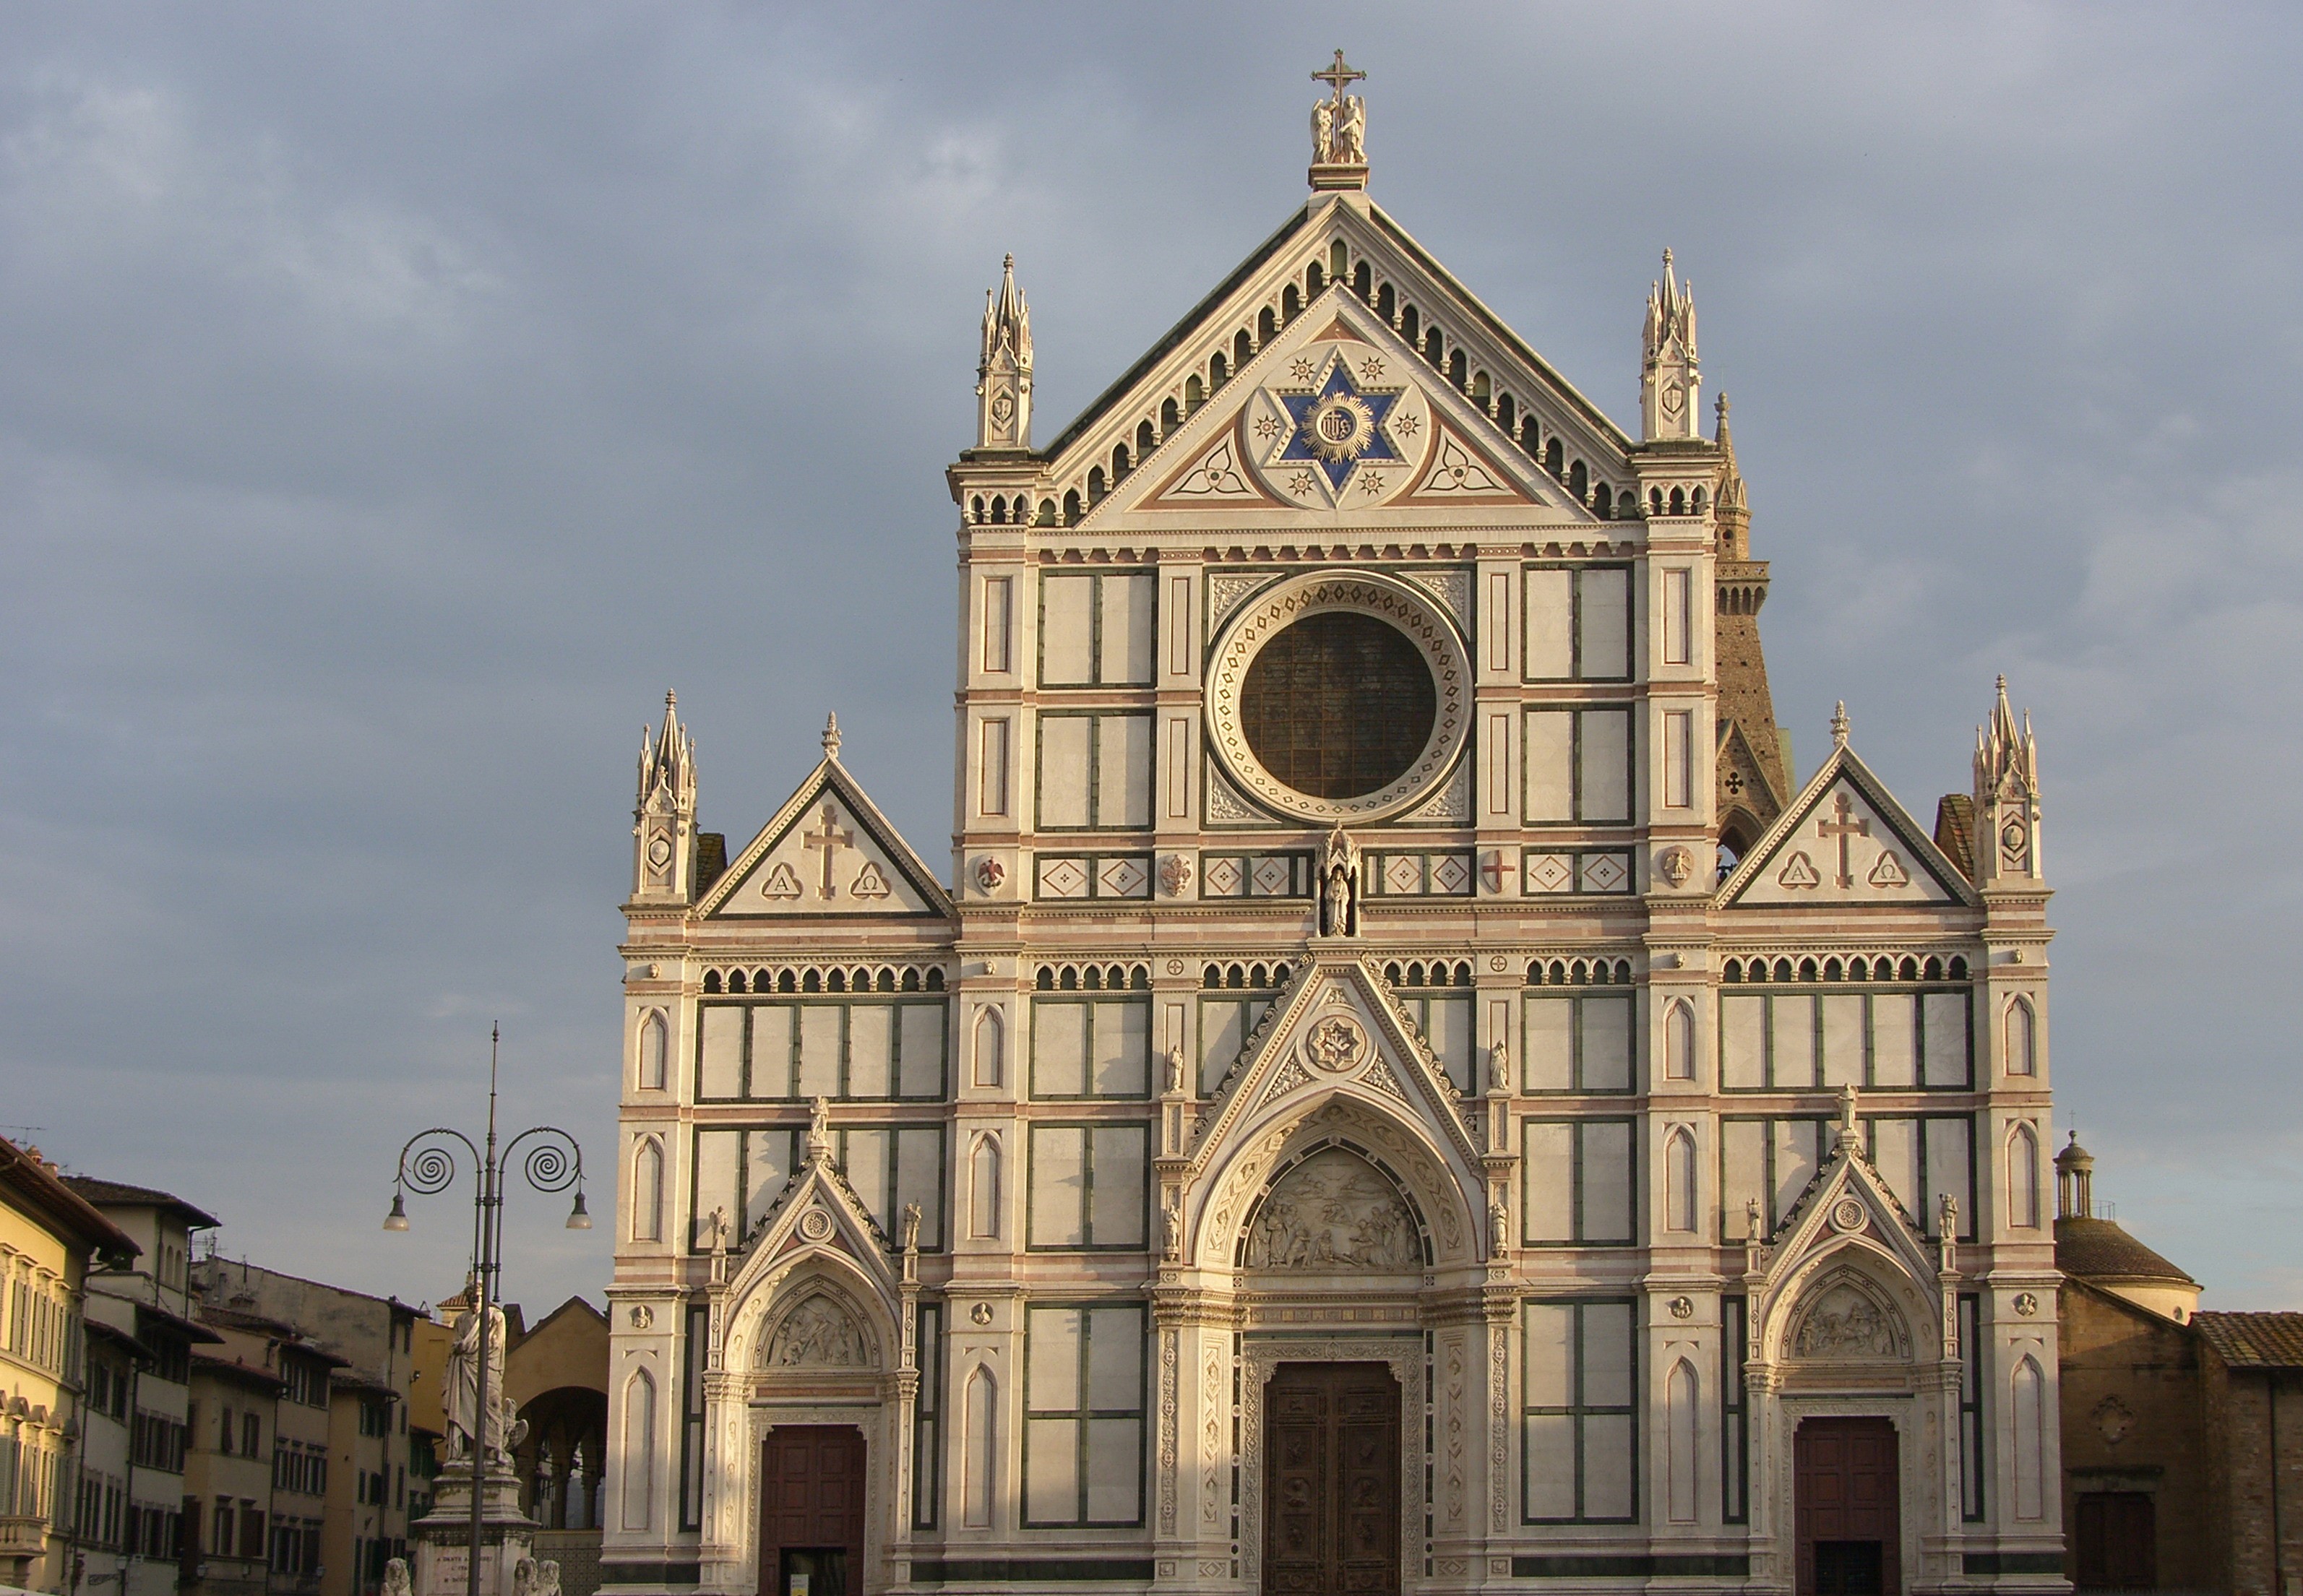 Basilica di Santa Croce